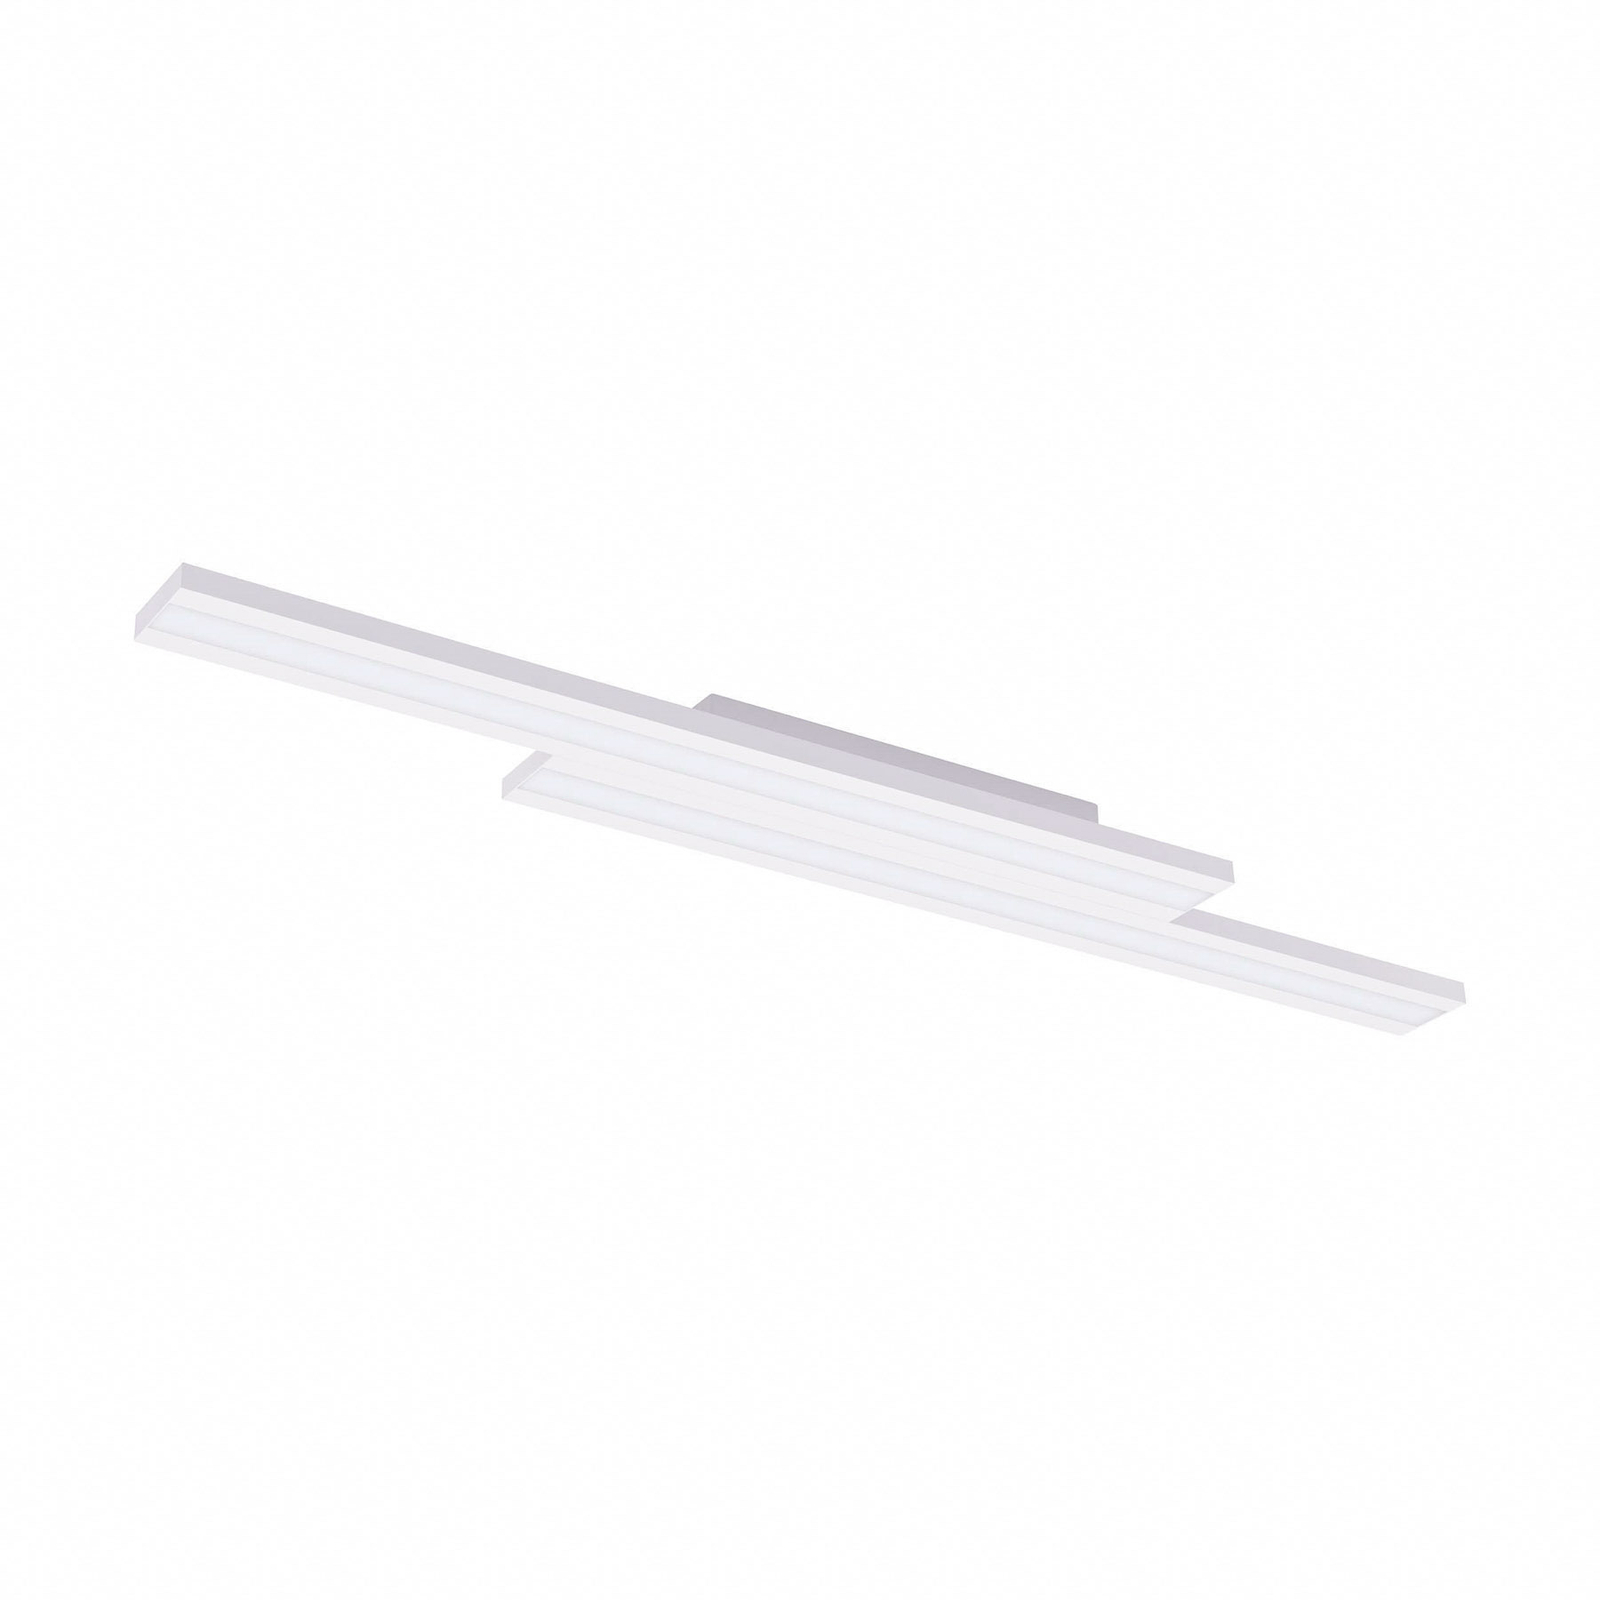 EGLO connect Saliteras-Z plafonnier LED blanc